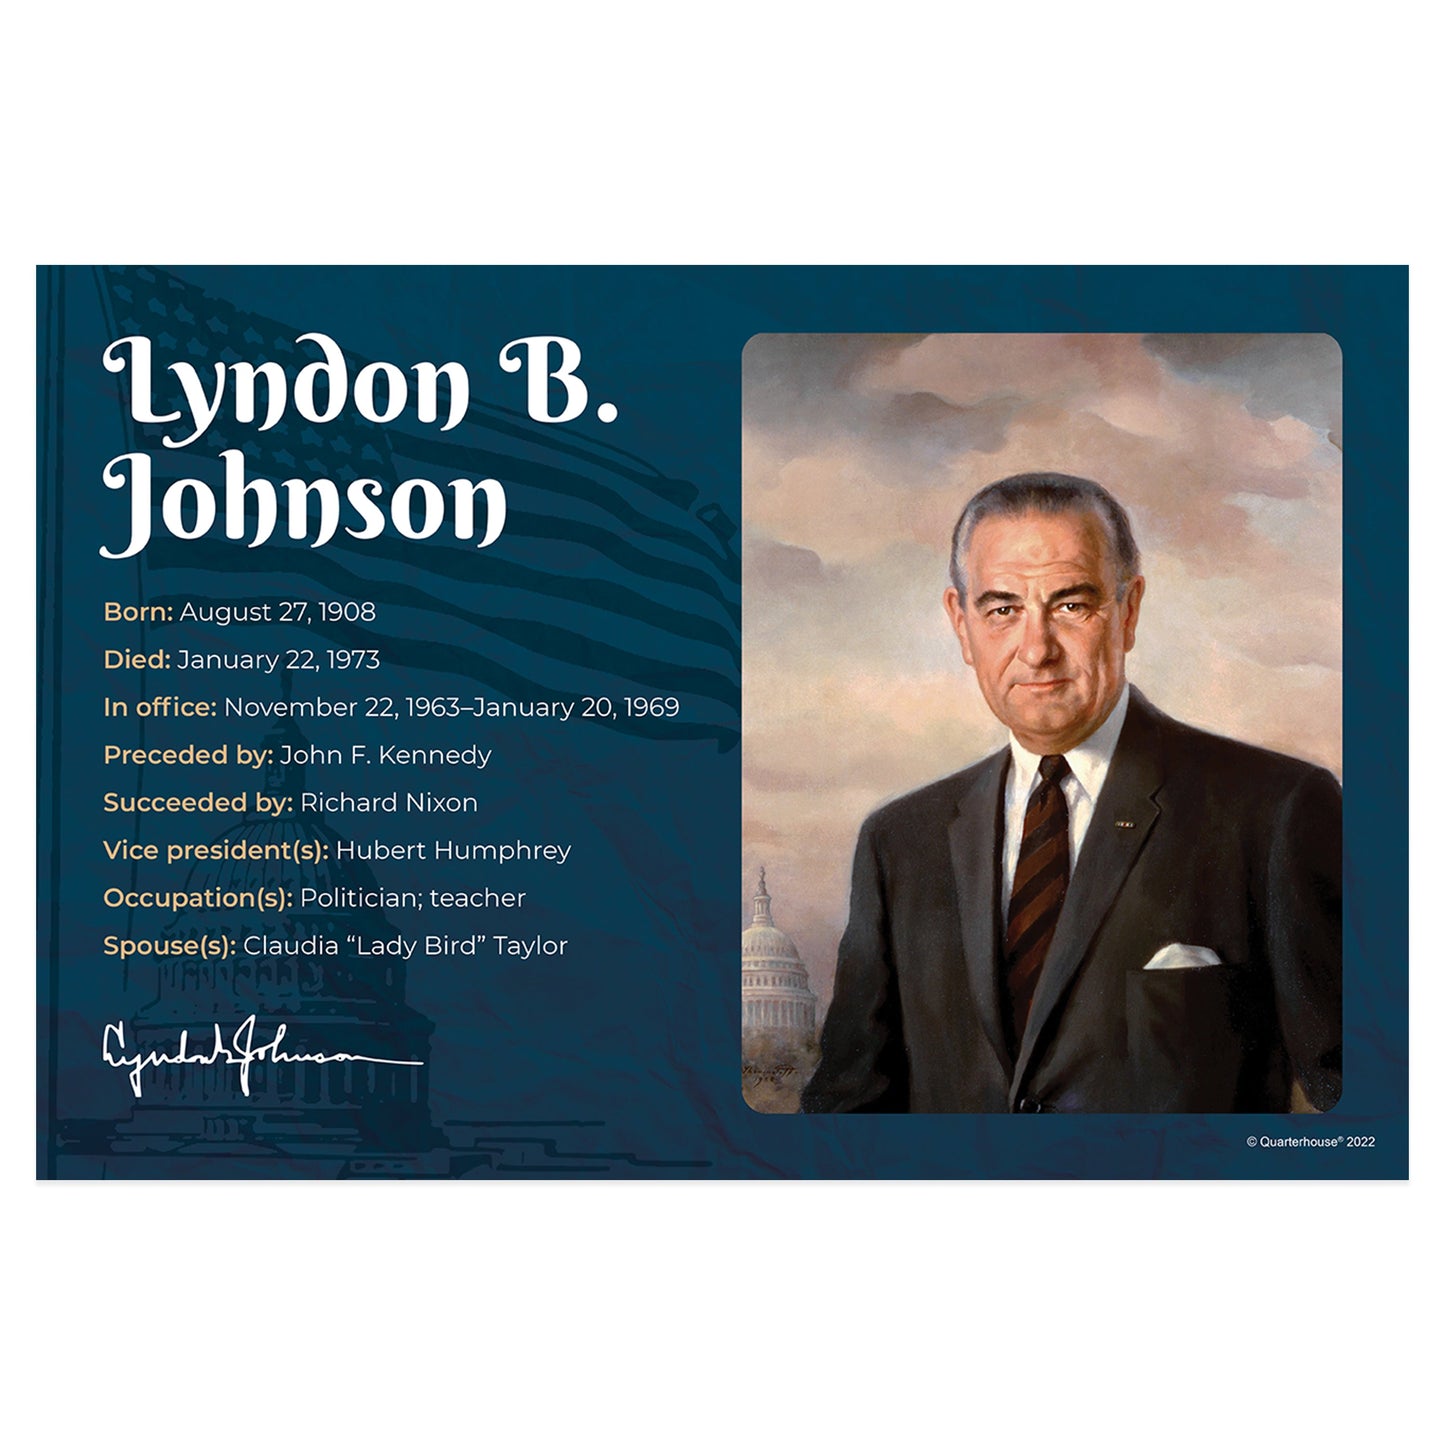 Quarterhouse President Lyndon B. Johnson Biographical Poster, Social Studies Classroom Materials for Teachers